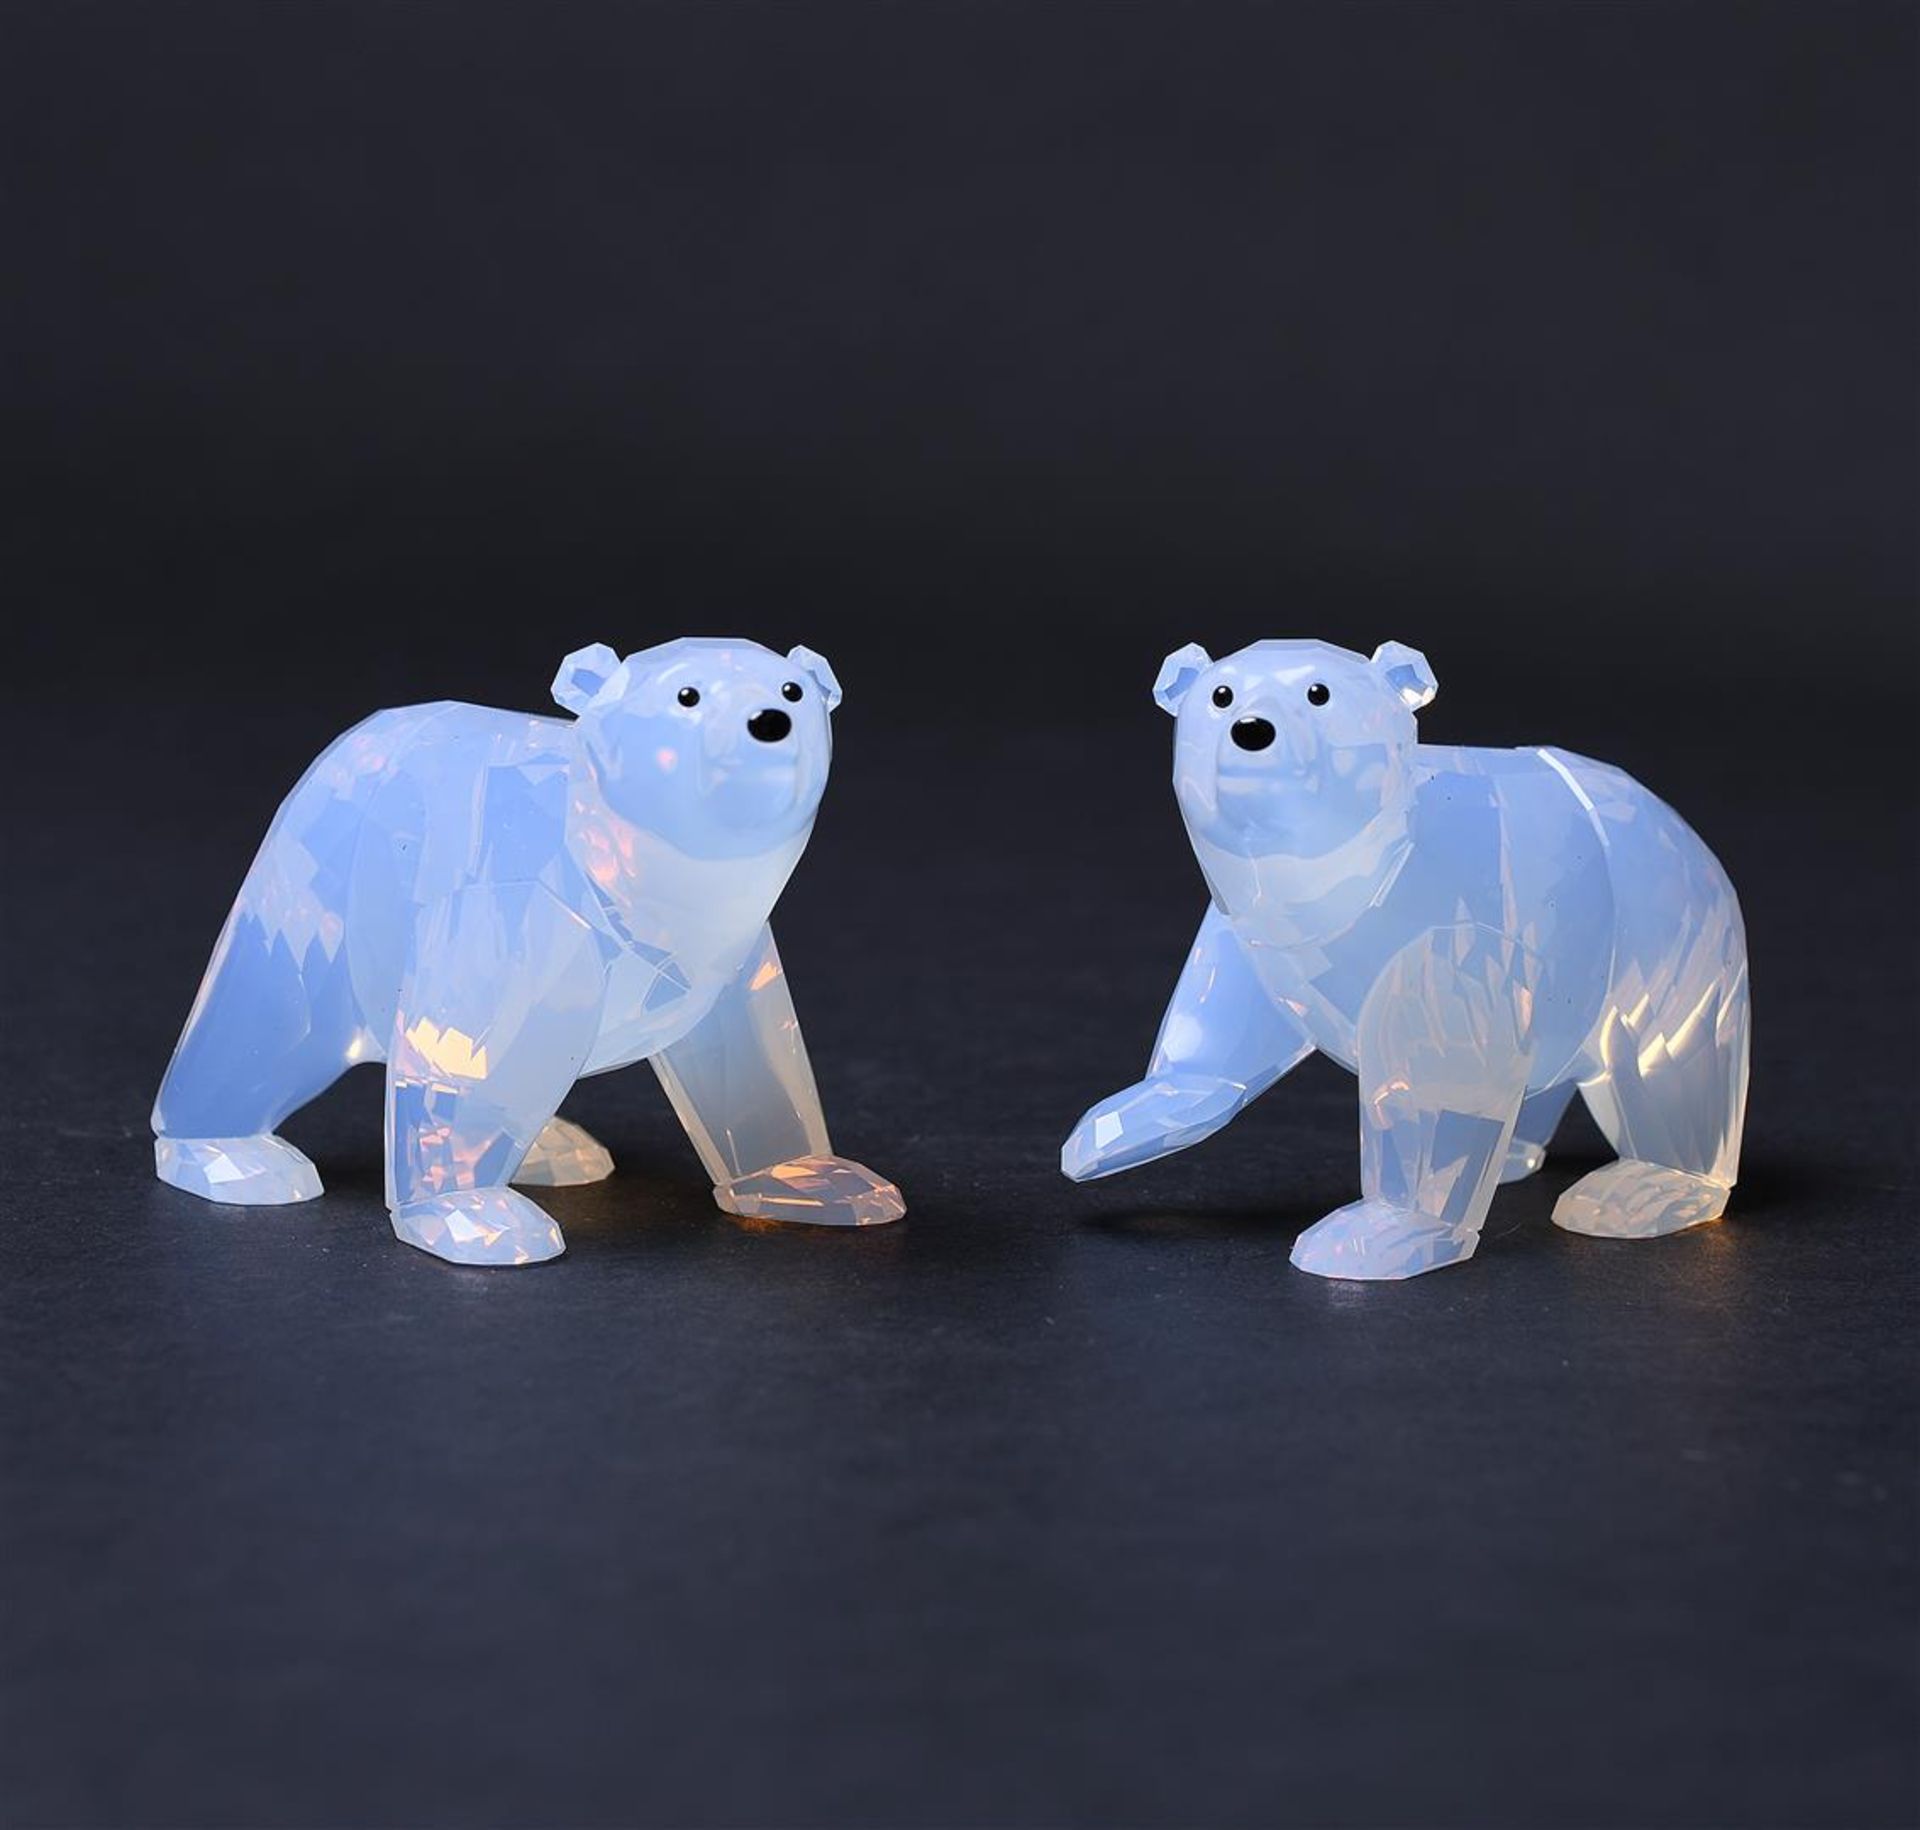 Swarovski SCS, Annual Edition 2011 - Arctic Bear Boy White Opal, Year of Edition 2011 ,1080774. Incl